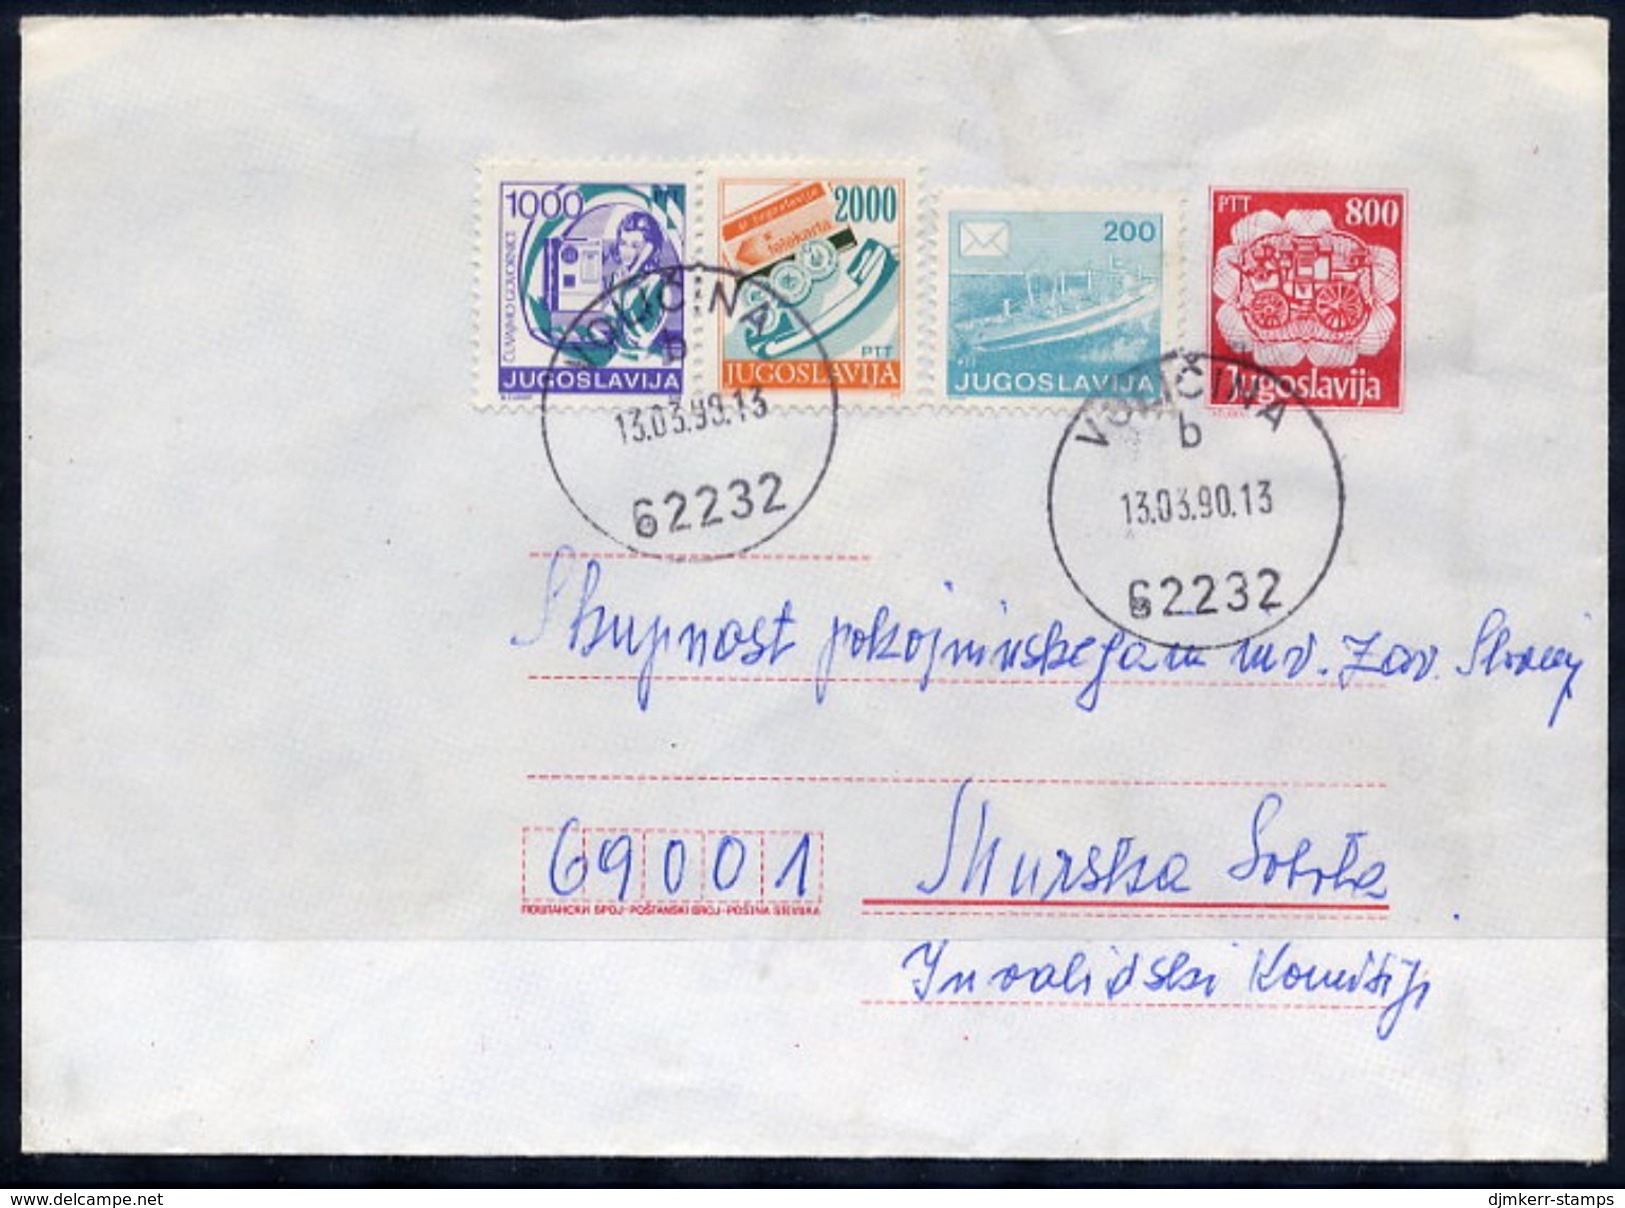 YUGOSLAVIA 1989 Mailcoach 800 D. Envelope Used With Additional Franking.  Michel U91 - Interi Postali